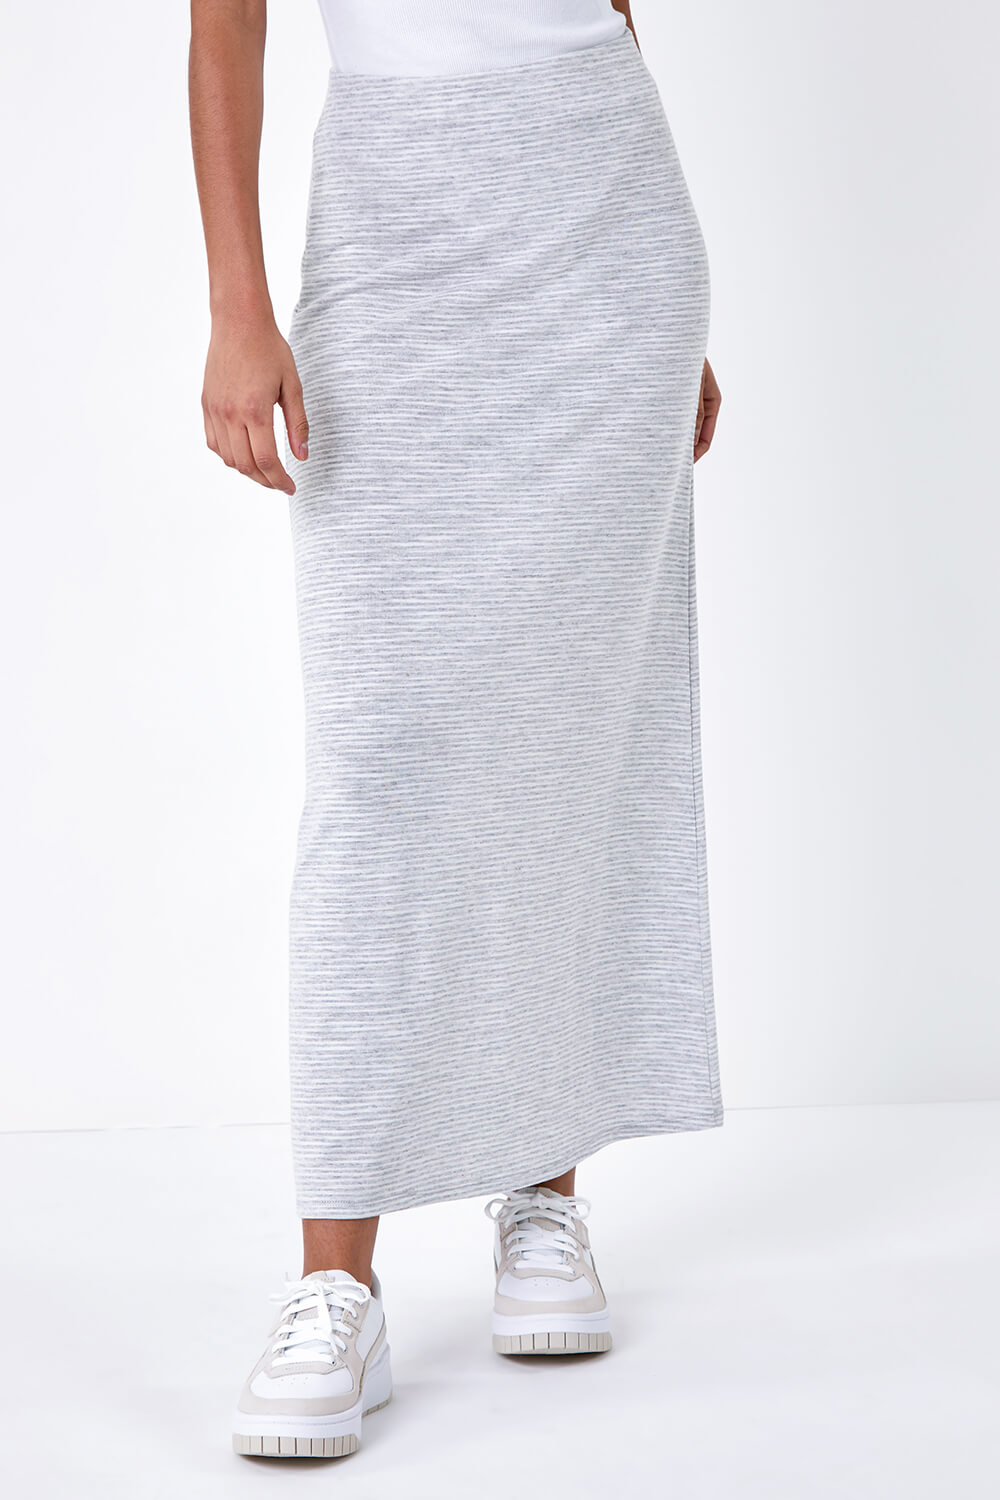 Grey Stripe Print Stretch Maxi Skirt, Image 4 of 5